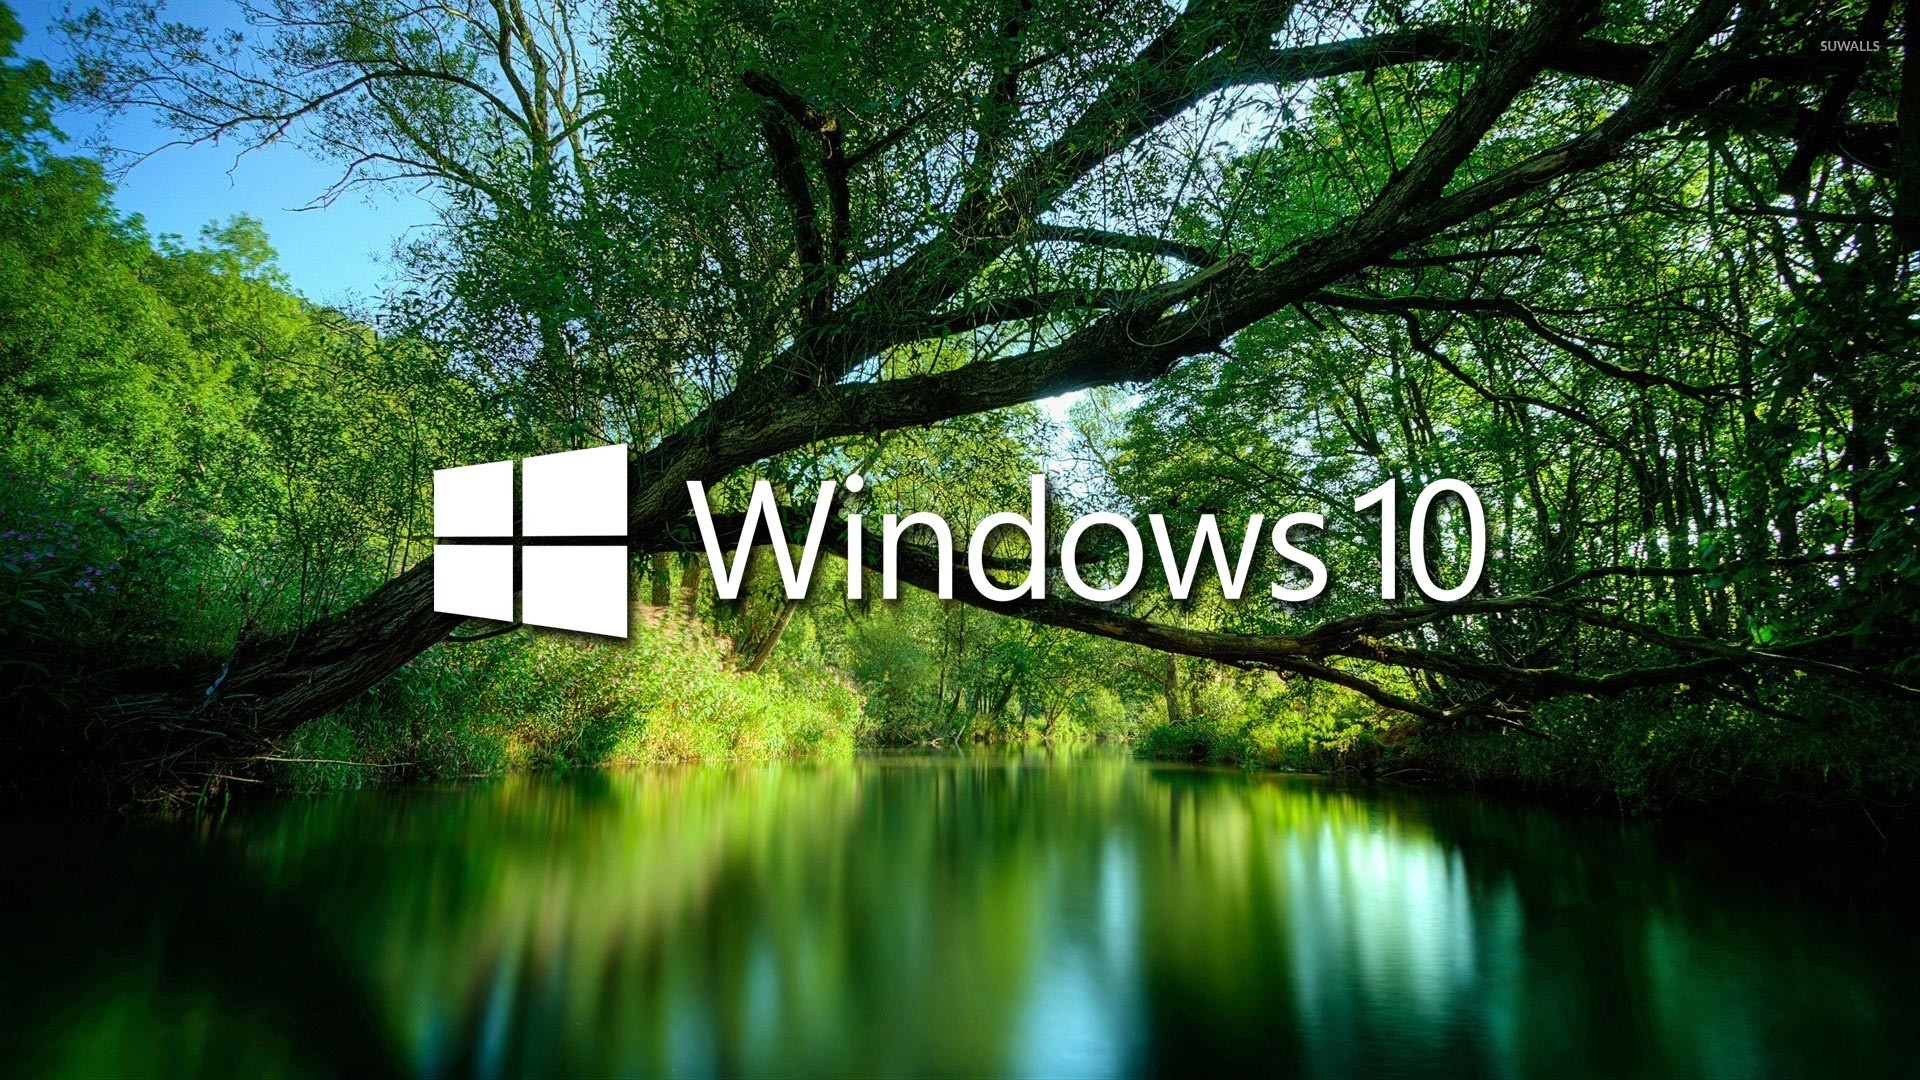 1920x1080 Windows 10 over a green lake white text logo wallpaper - Computer .